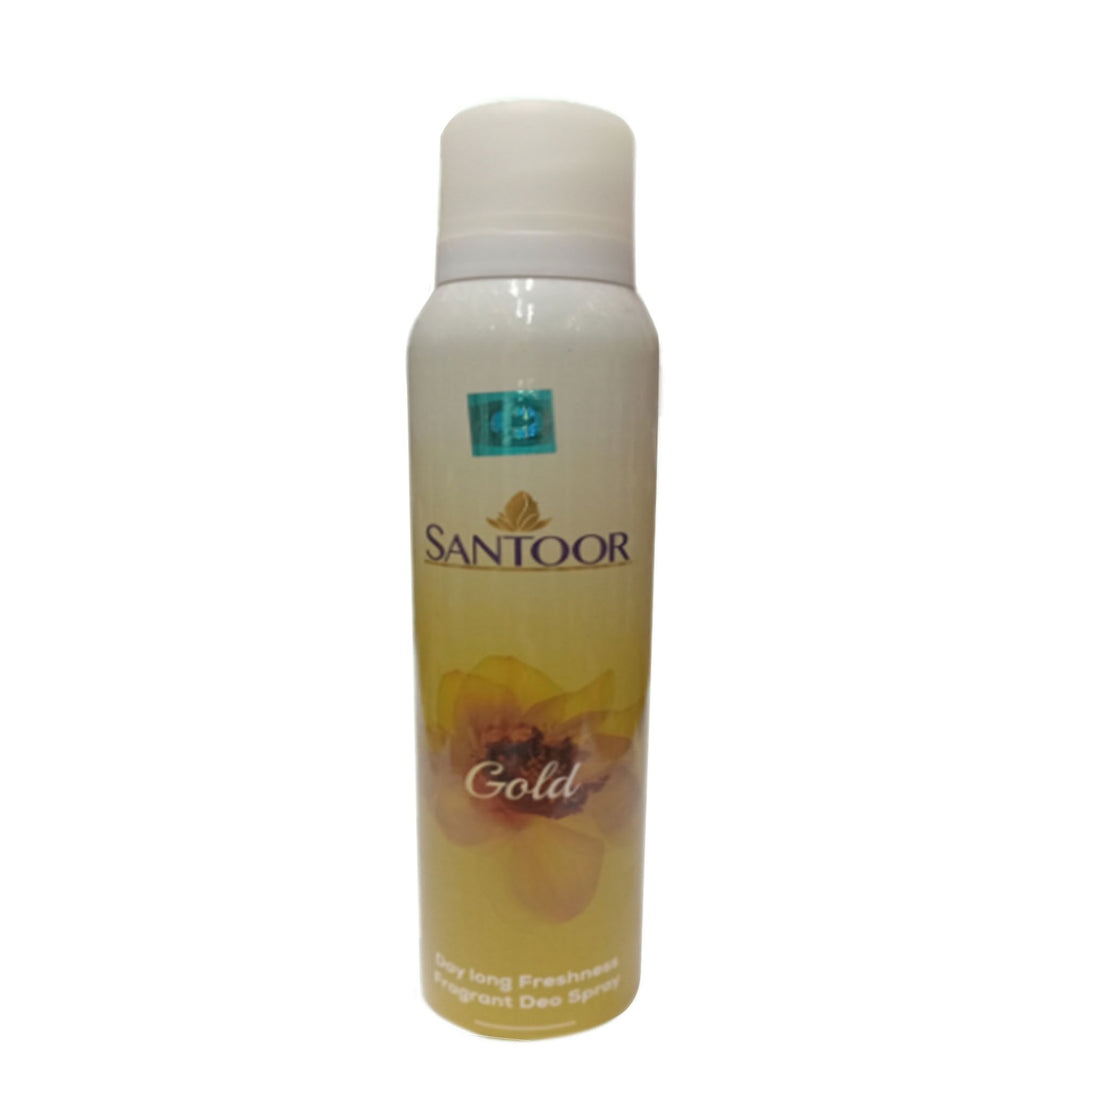 Santoor Gold Perfume Deo Spray for Women - (150ml)